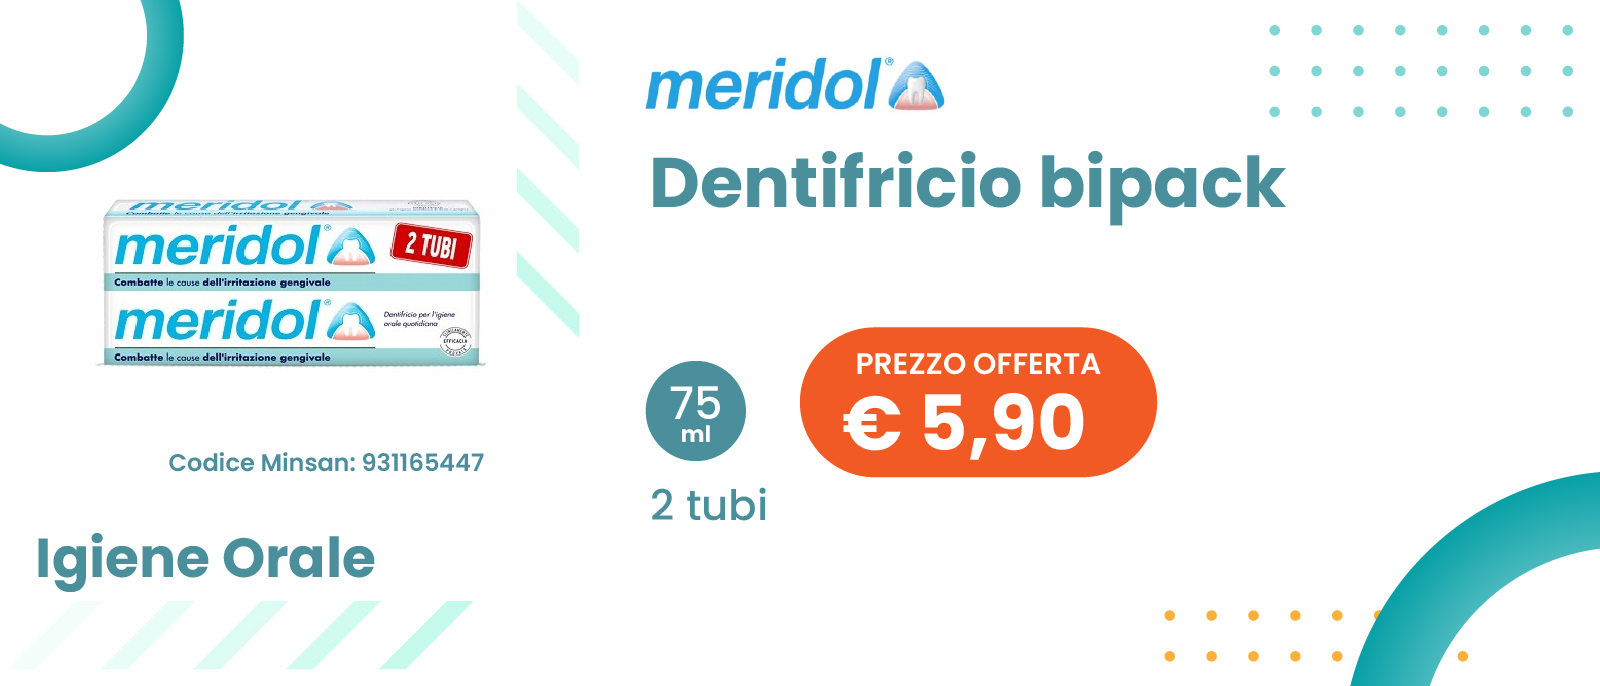 Meridol-dentifricio-bipack